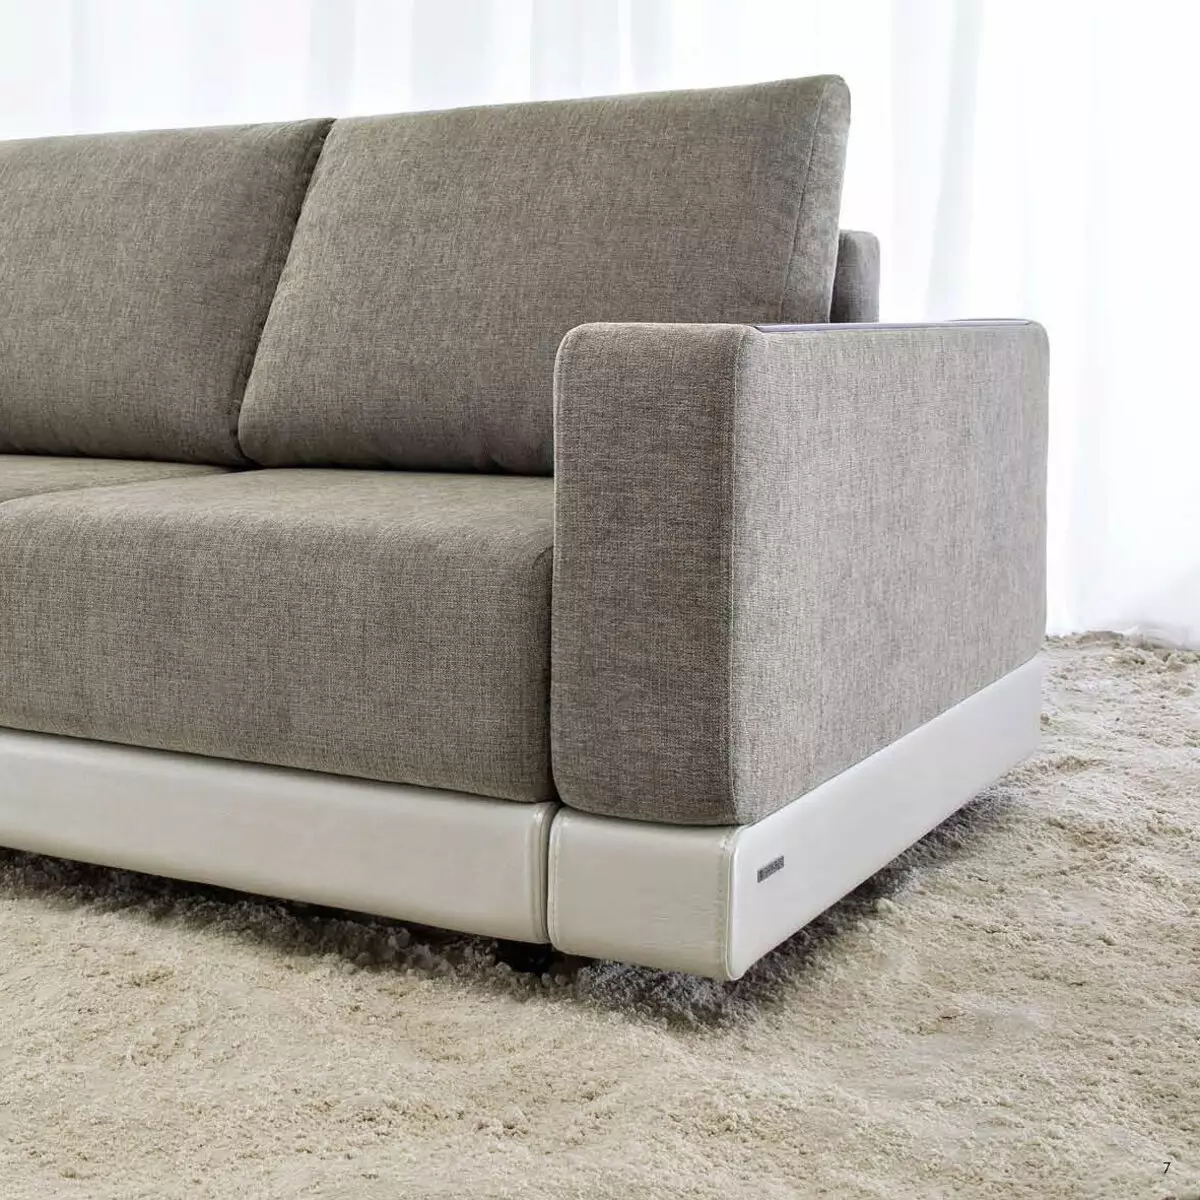 Push καναπέδες: γωνιά, ευθεία και αρθρωτά, καναπέδες και άλλα μοντέλα από το εργοστάσιο. Κριτικές πελατών 9127_3